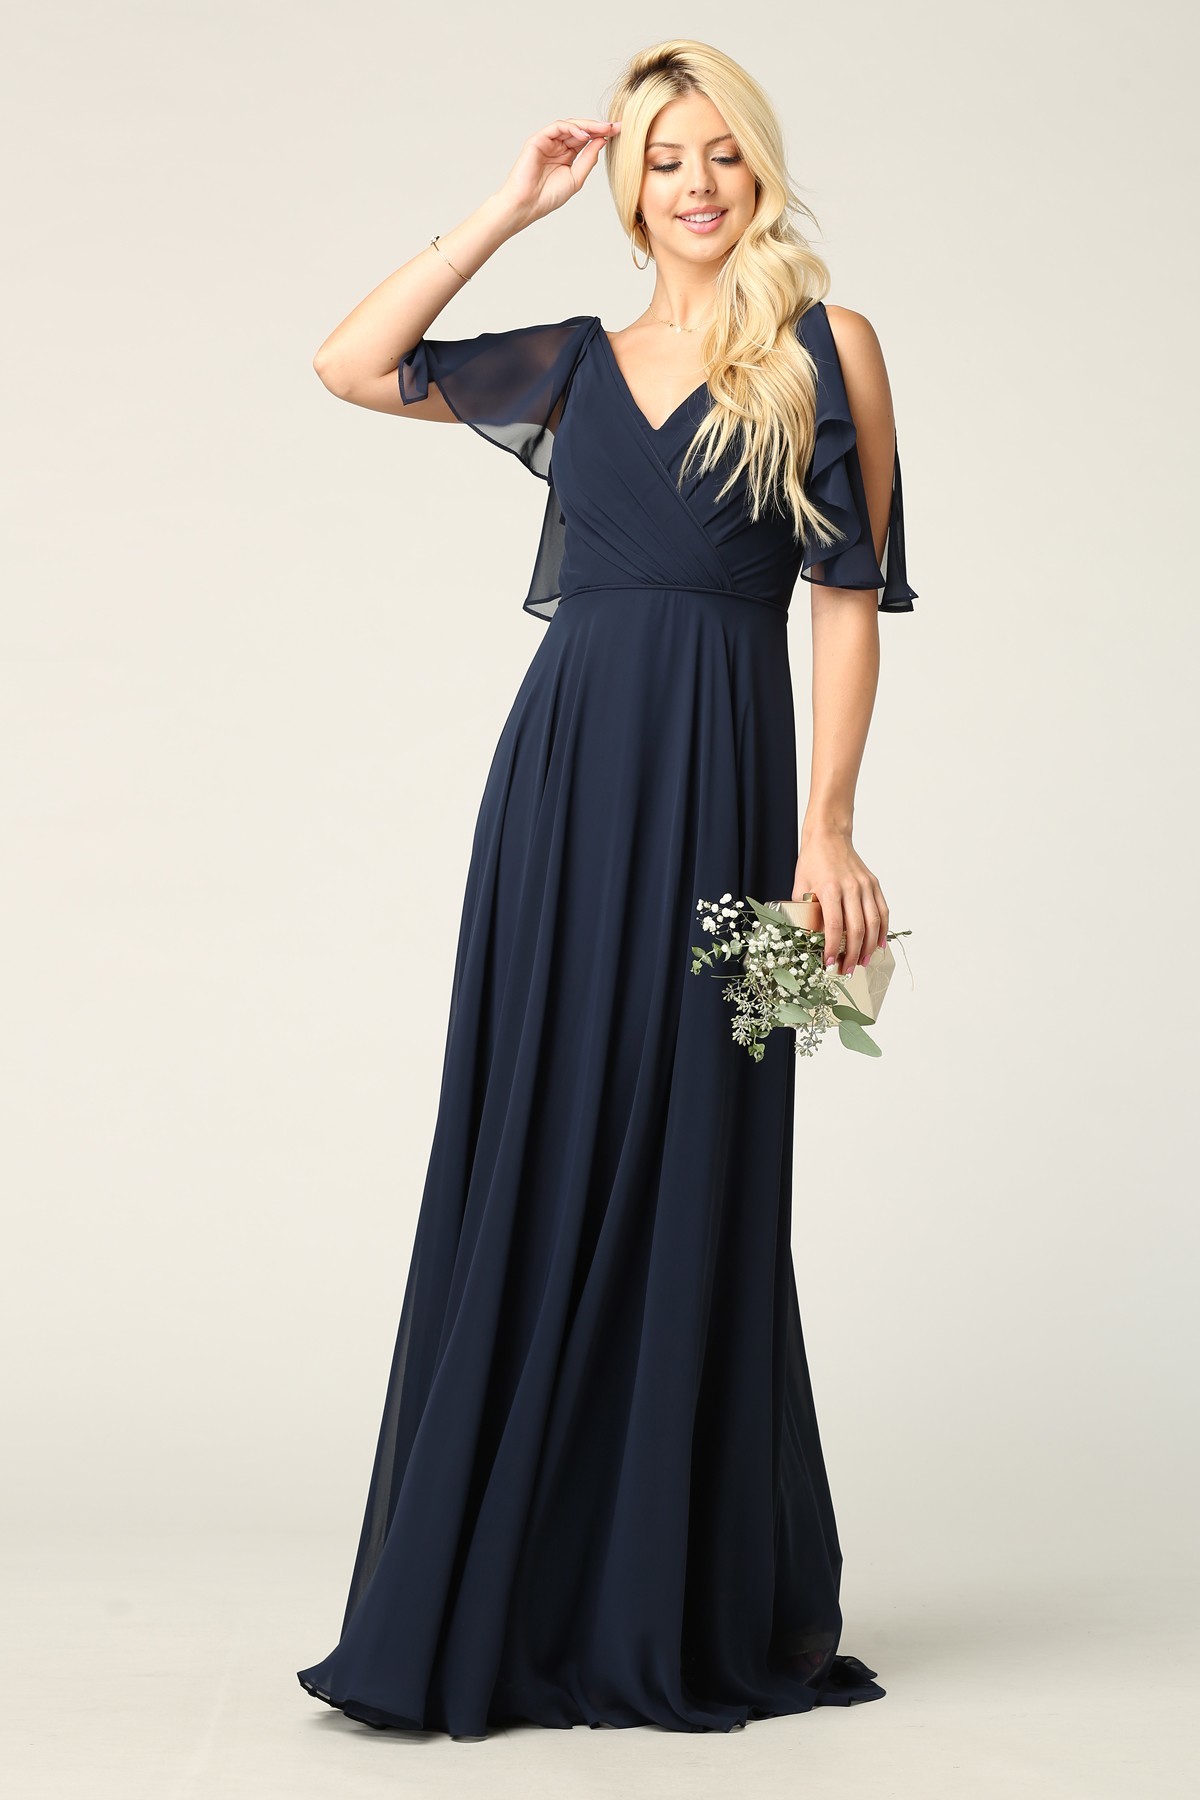 Keren B #30 Bridesmaid dresses Black